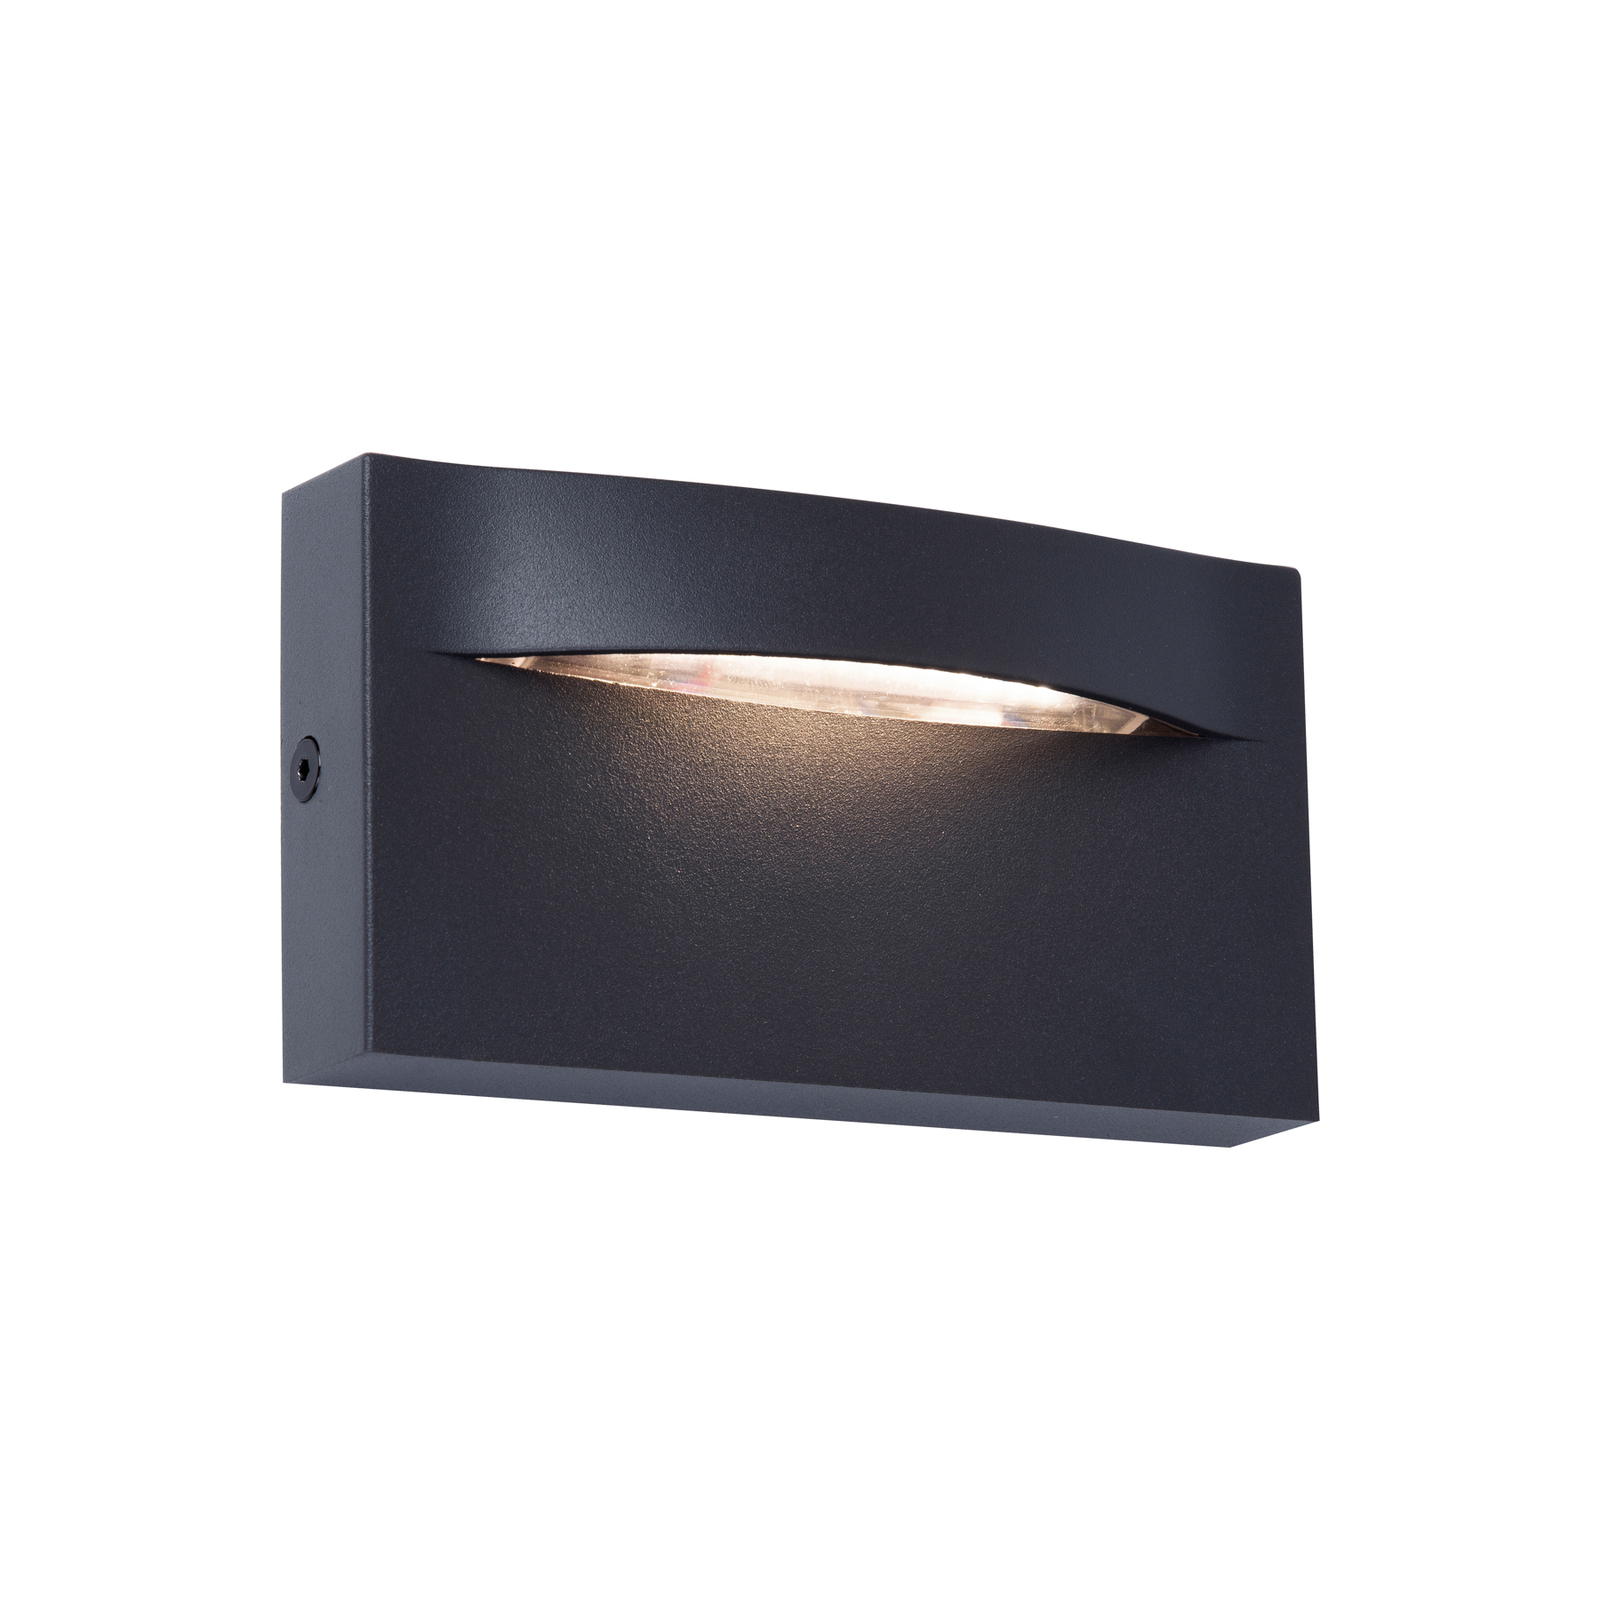 LED outdoor wall light Vita, dark grey, 13.7 x 7.5 cm